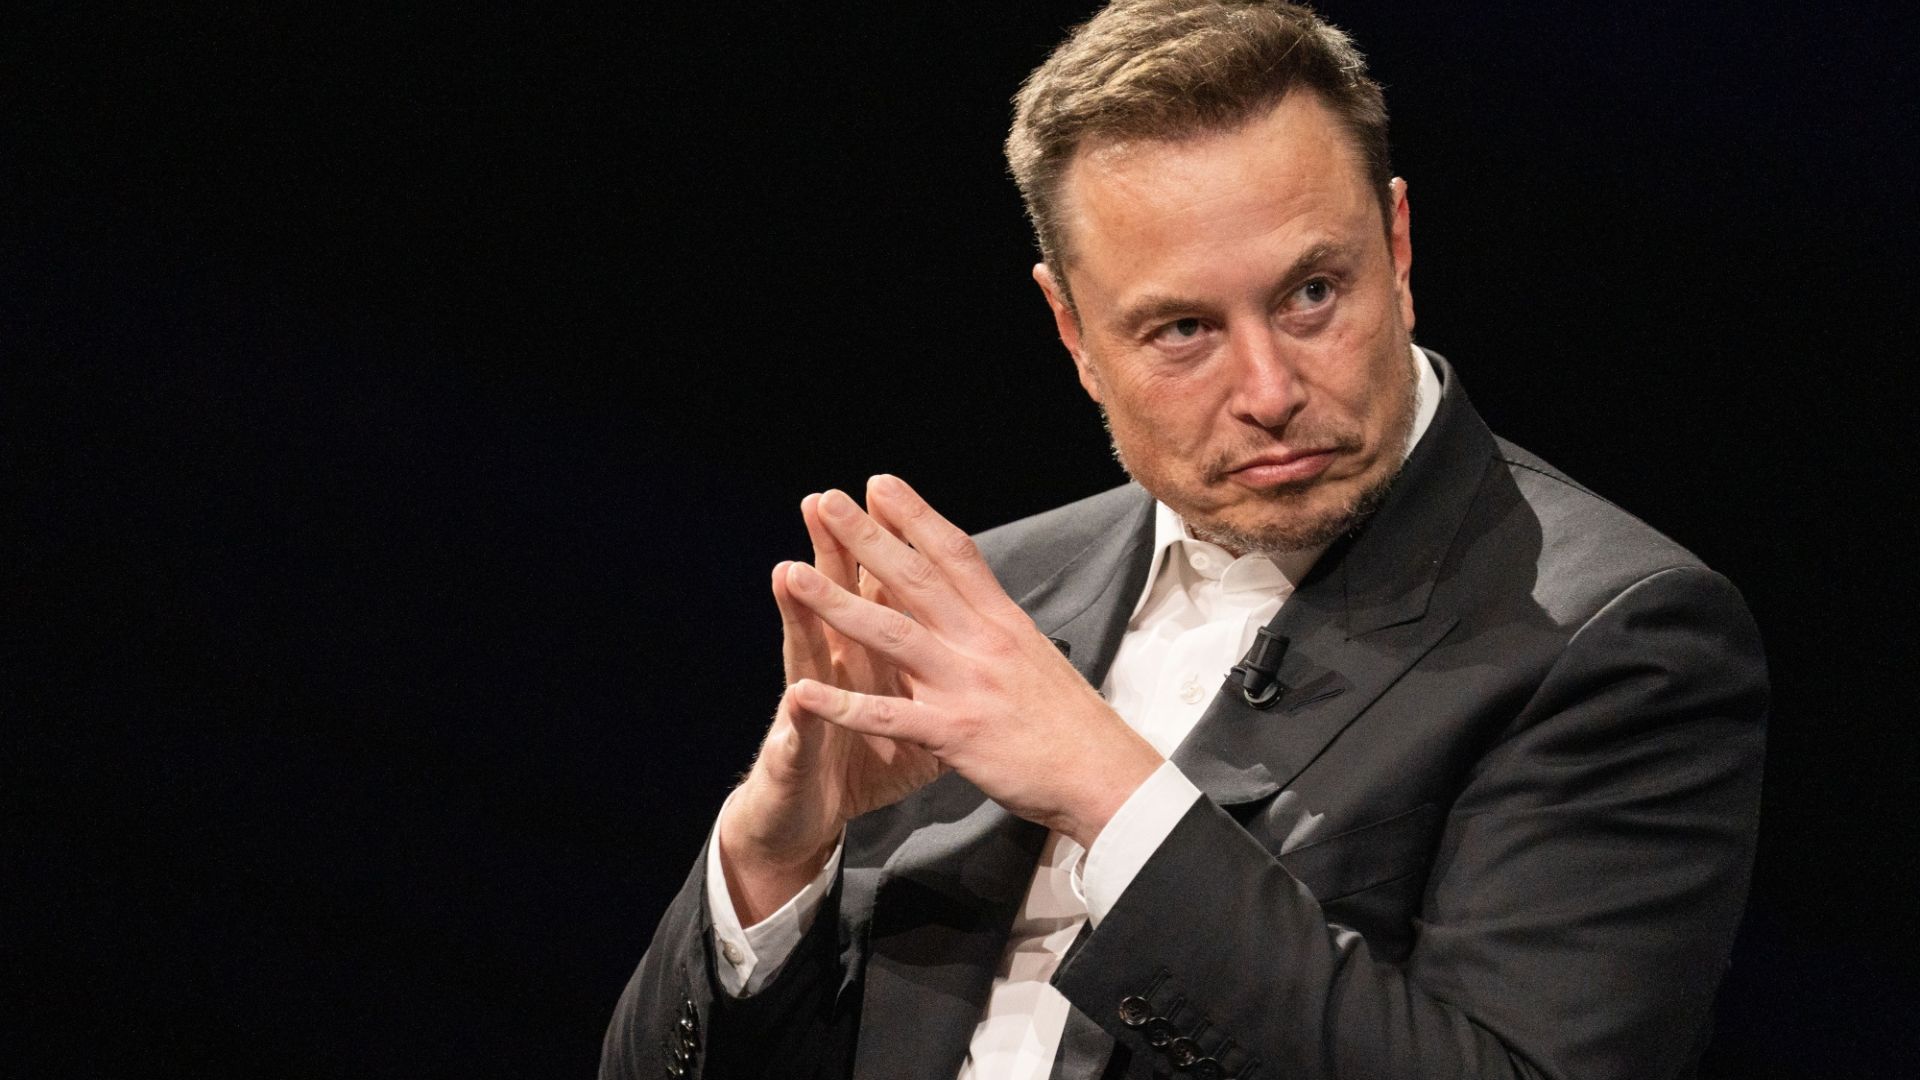 Tesla CEO Elon Musk to Visit India, Meet PM Modi: Reuters